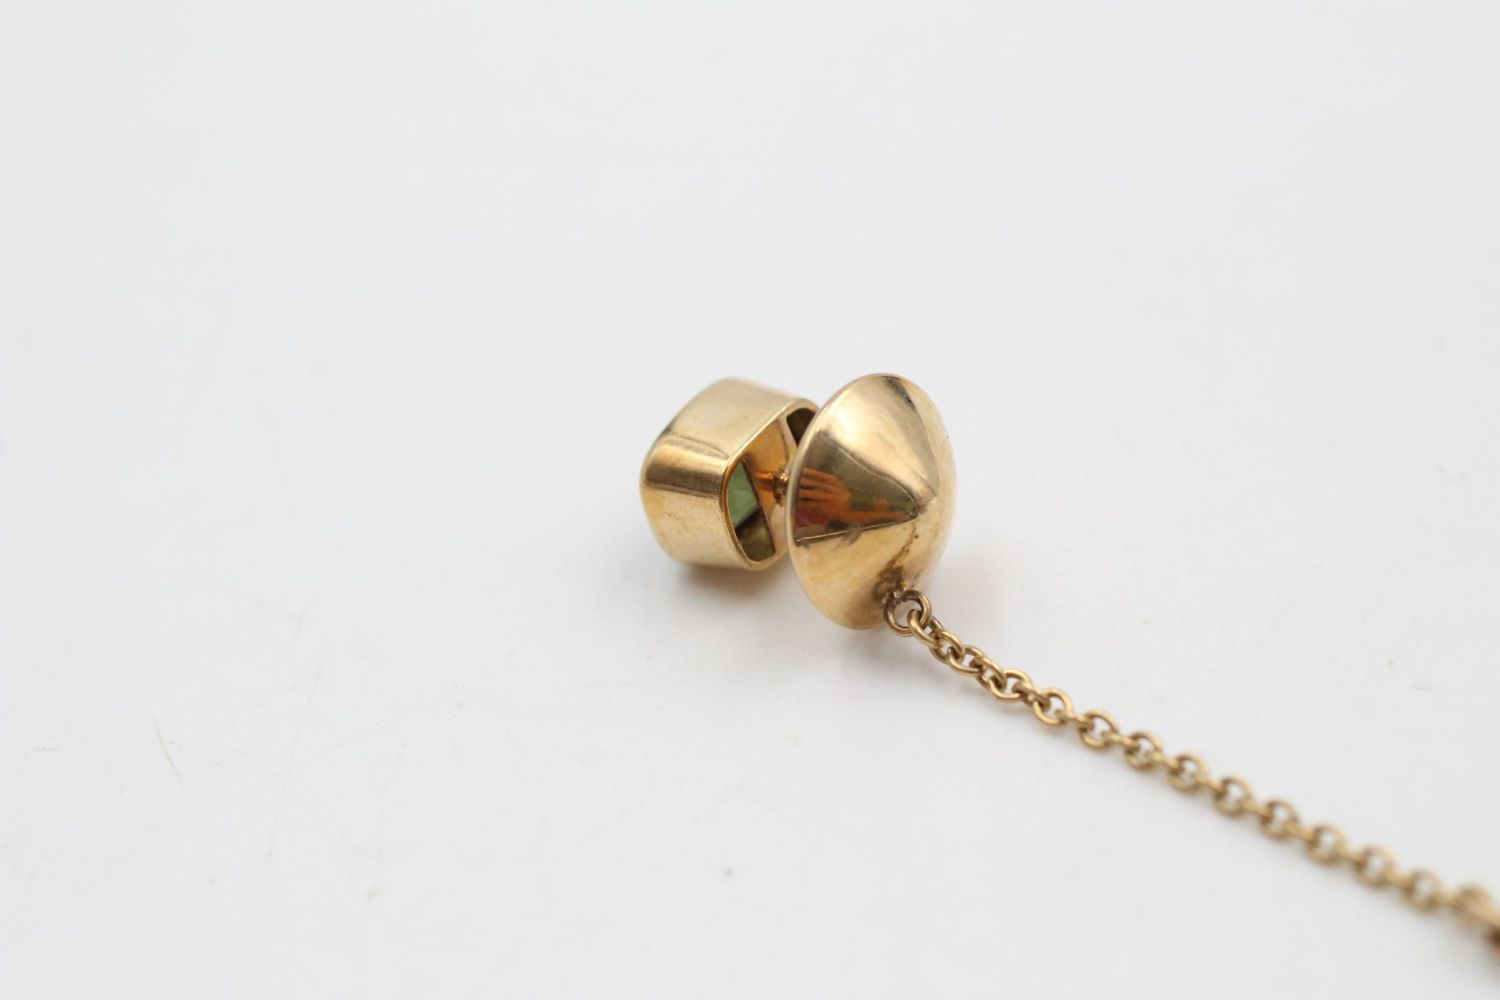 9ct gold moldavite glass tie pin 2.8 grams gross - Image 5 of 5